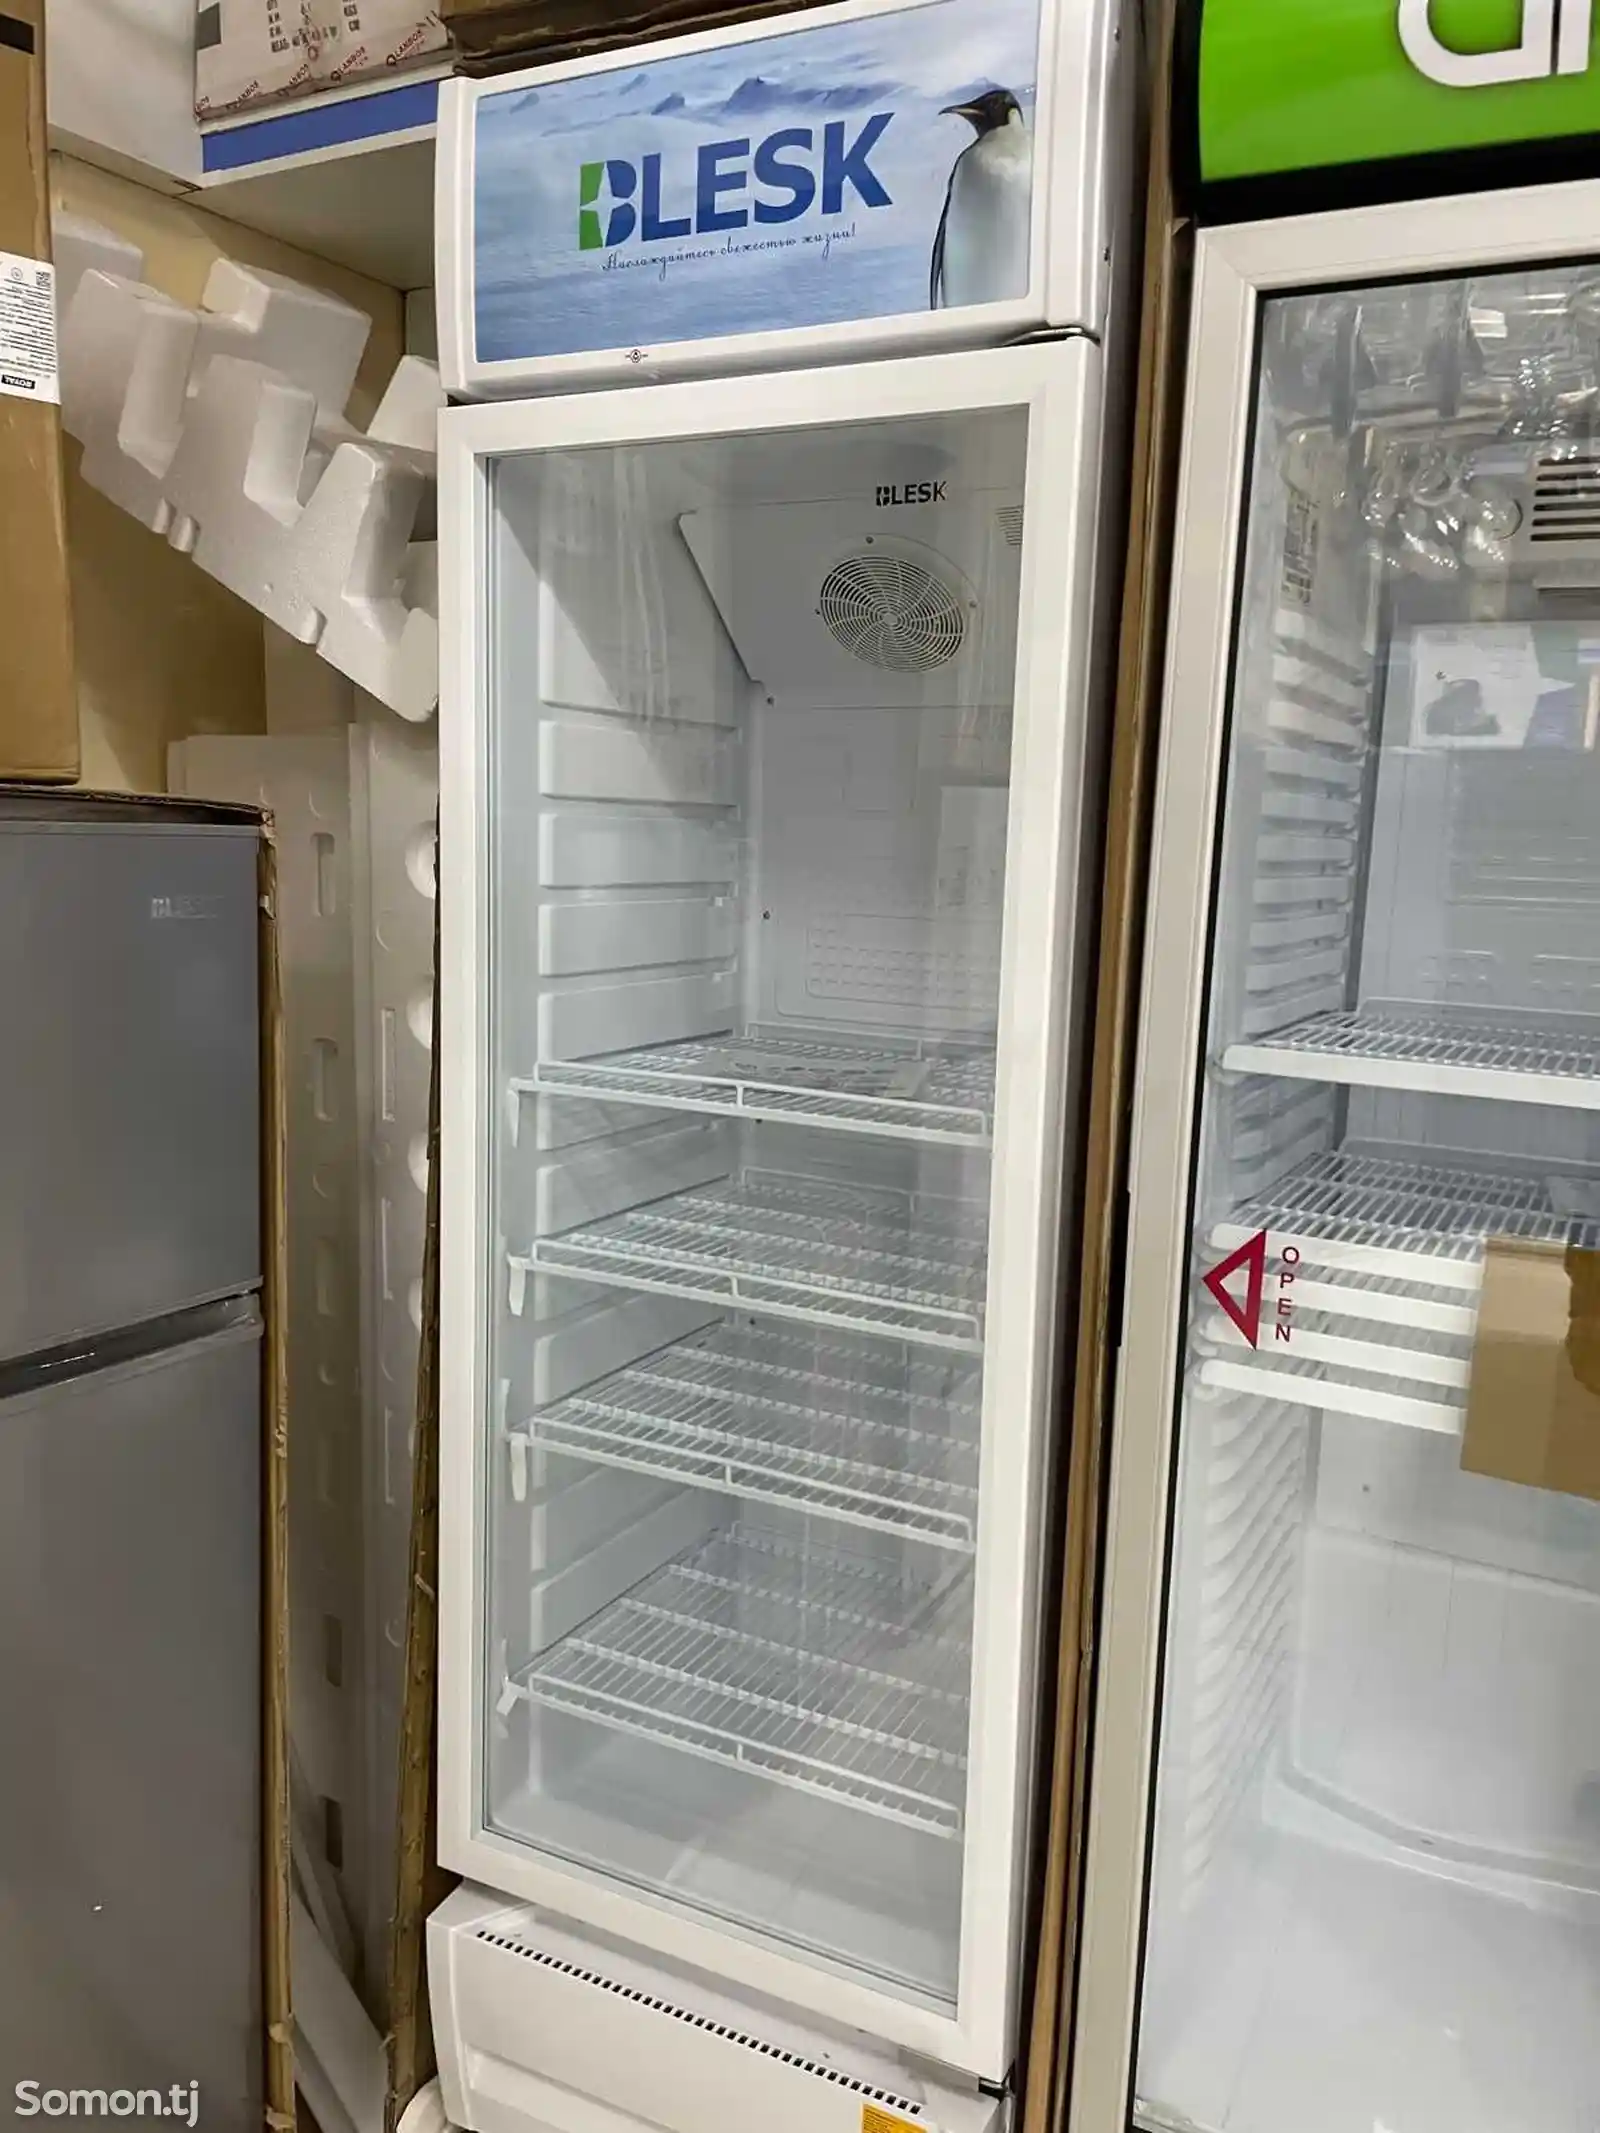 Холодильник витринный Blesk-1